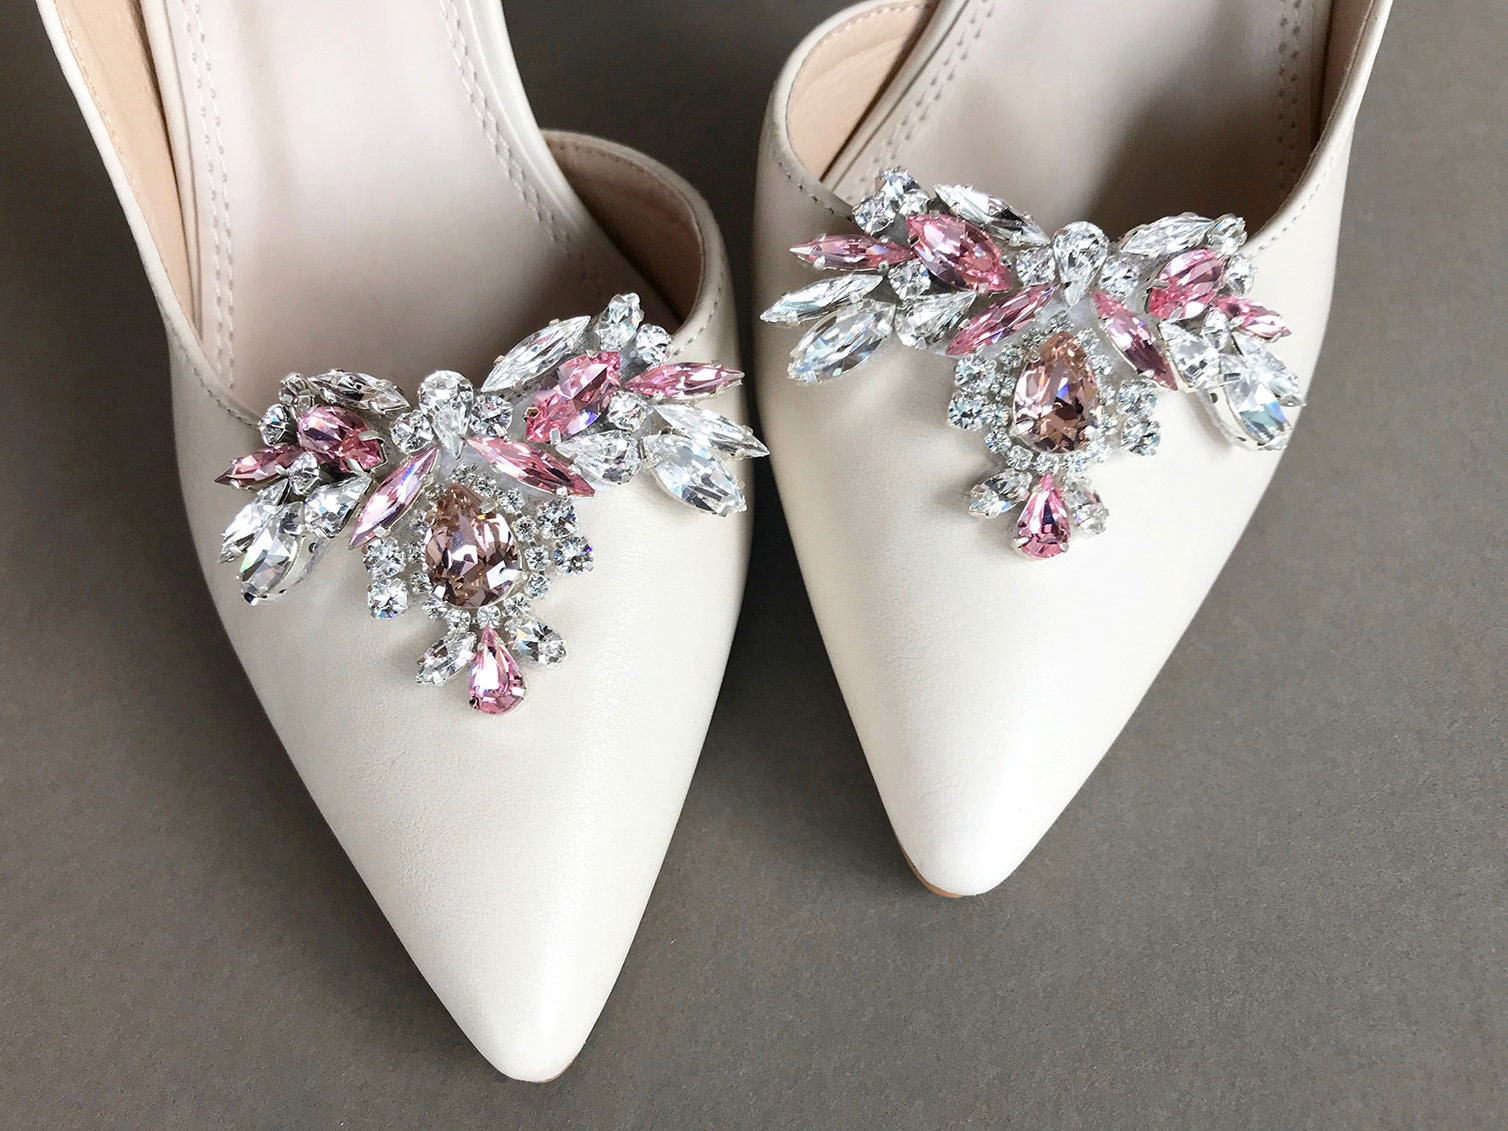 Gold/Silver Shoe Clip Wedding Shoes High Heel Women Bride